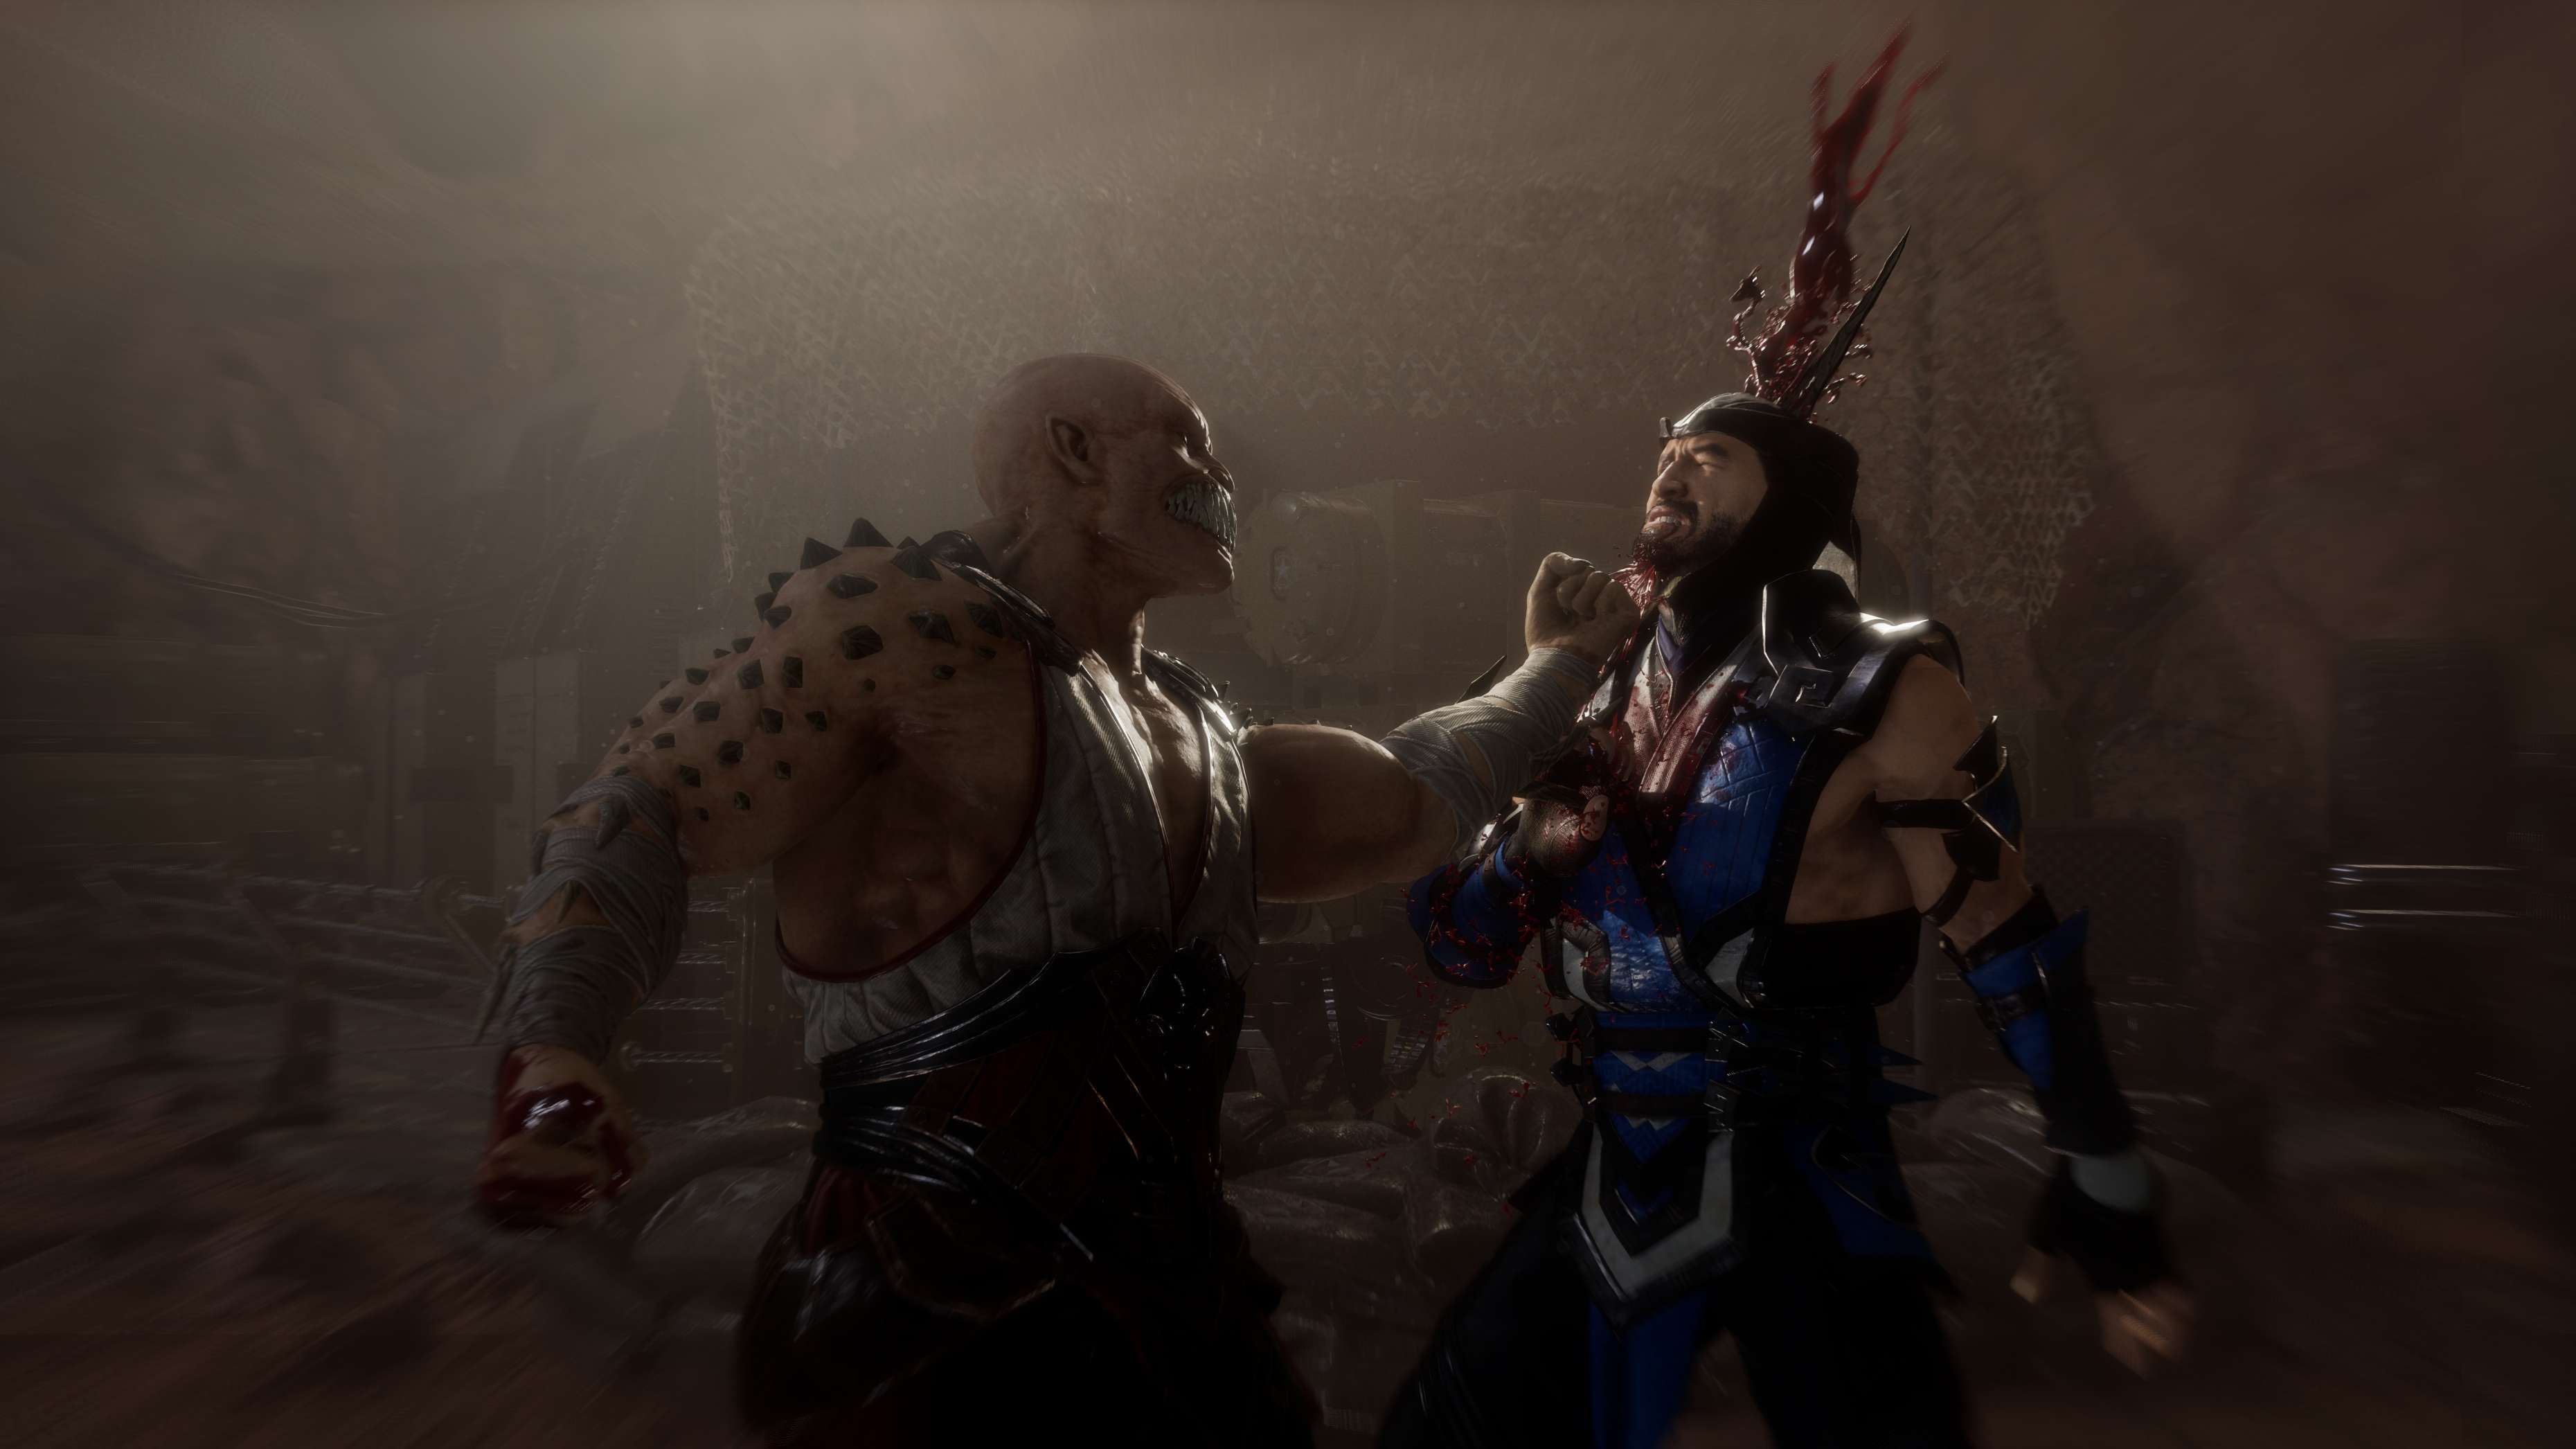 Mortal Kombat 11 ma otrzymać lepszy port na PC niż Mortal Kombat X